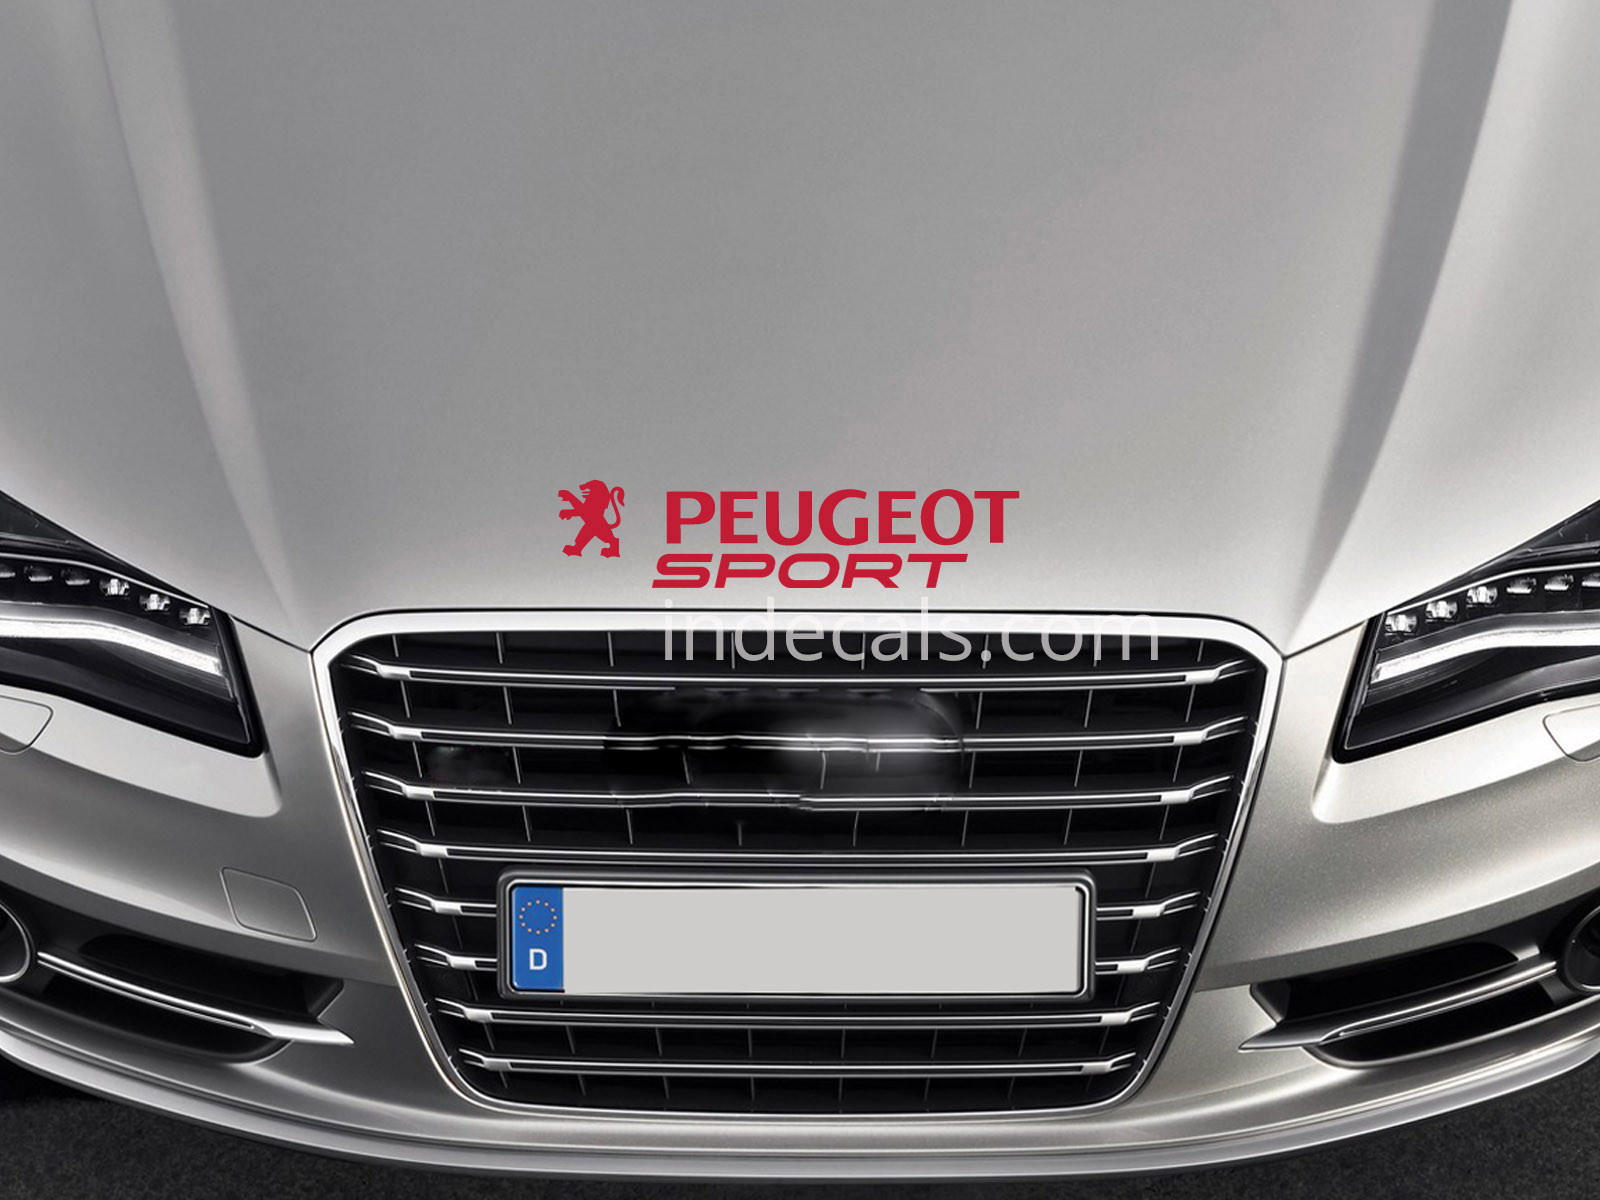 1 x Peugeot Sport Sticker for Bonnet - Red